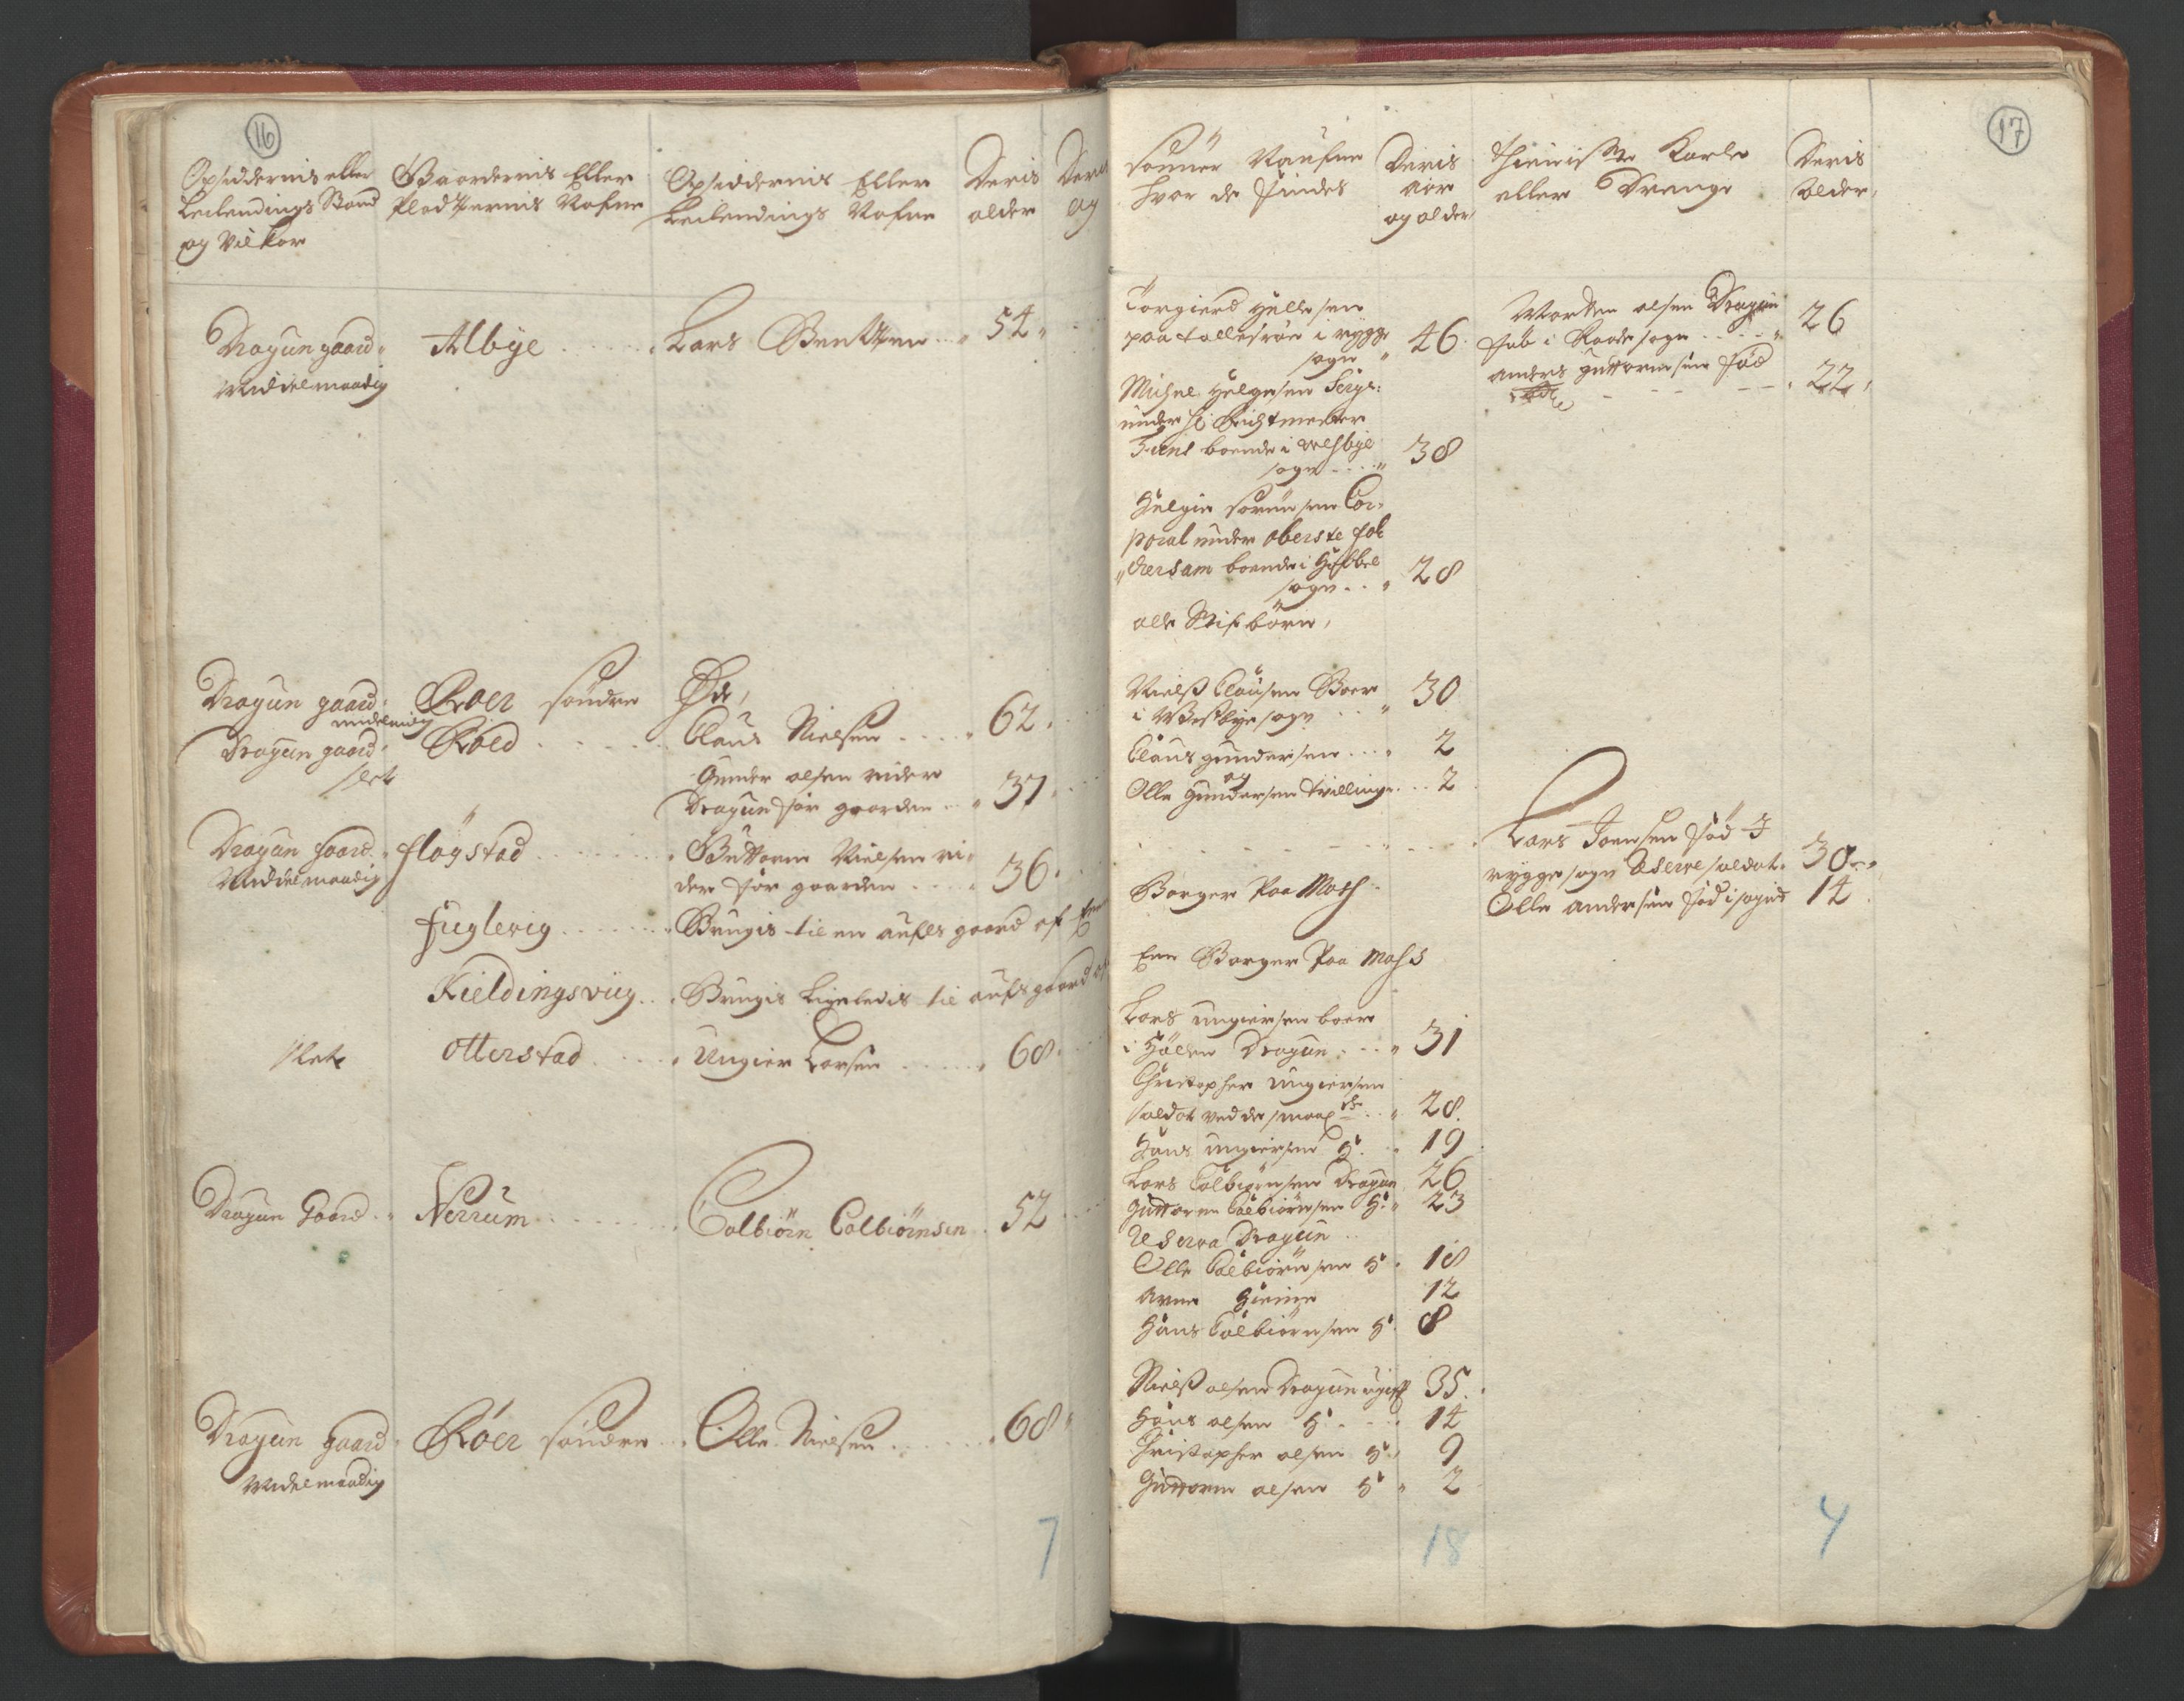 RA, Census (manntall) 1701, no. 1: Moss, Onsøy, Tune og Veme fogderi and Nedre Romerike fogderi, 1701, p. 16-17